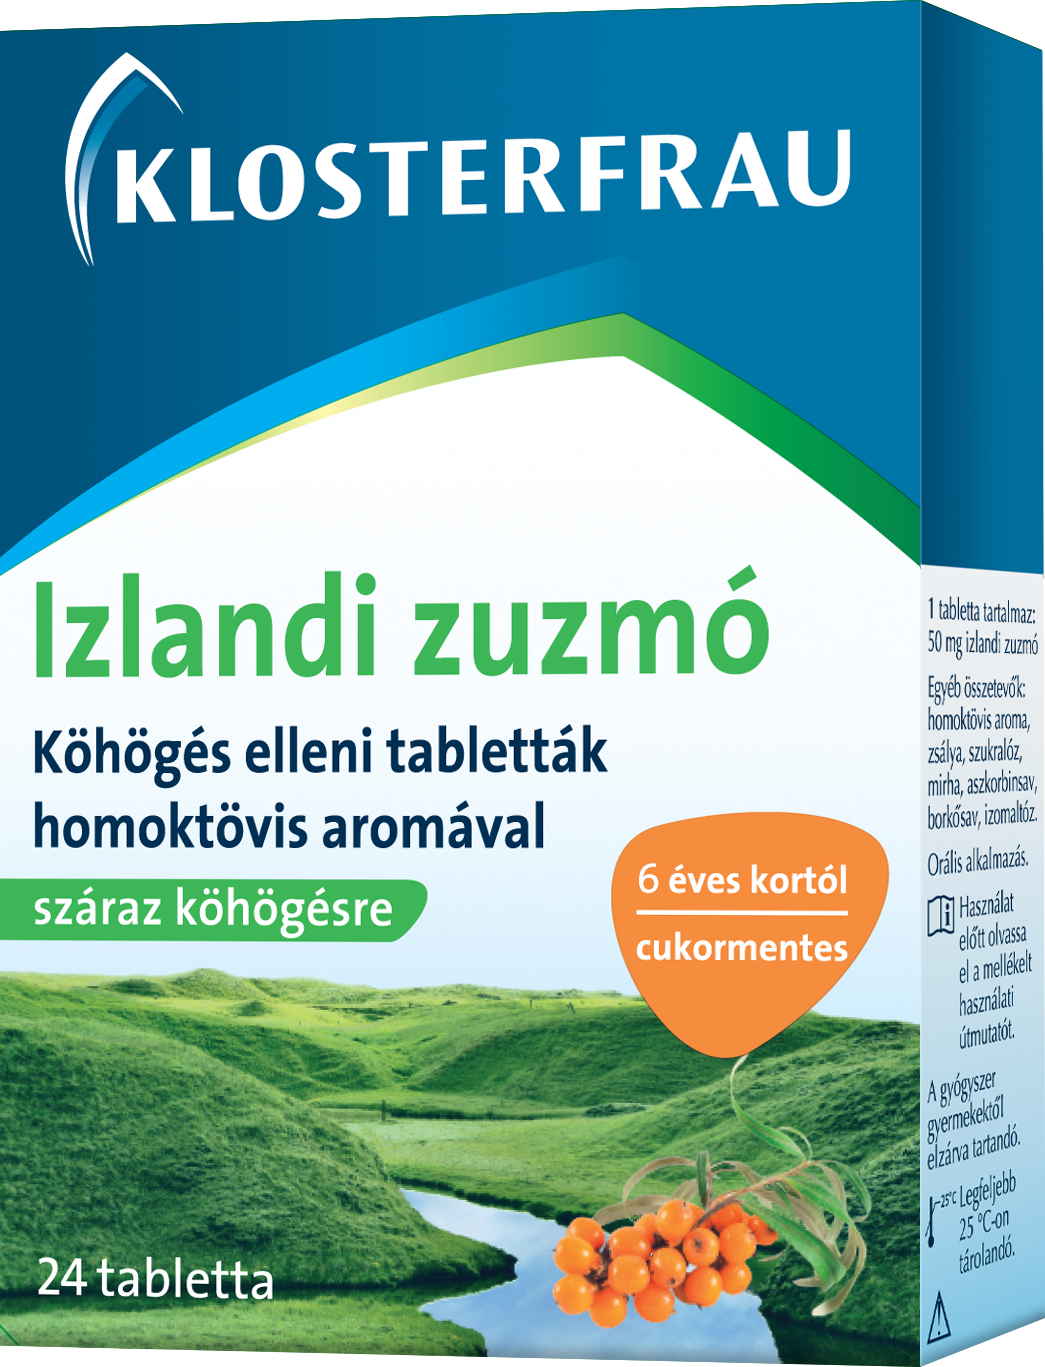 Klosterfrau izlandi zuzmó köhögés elleni tabletta homoktövis aromával